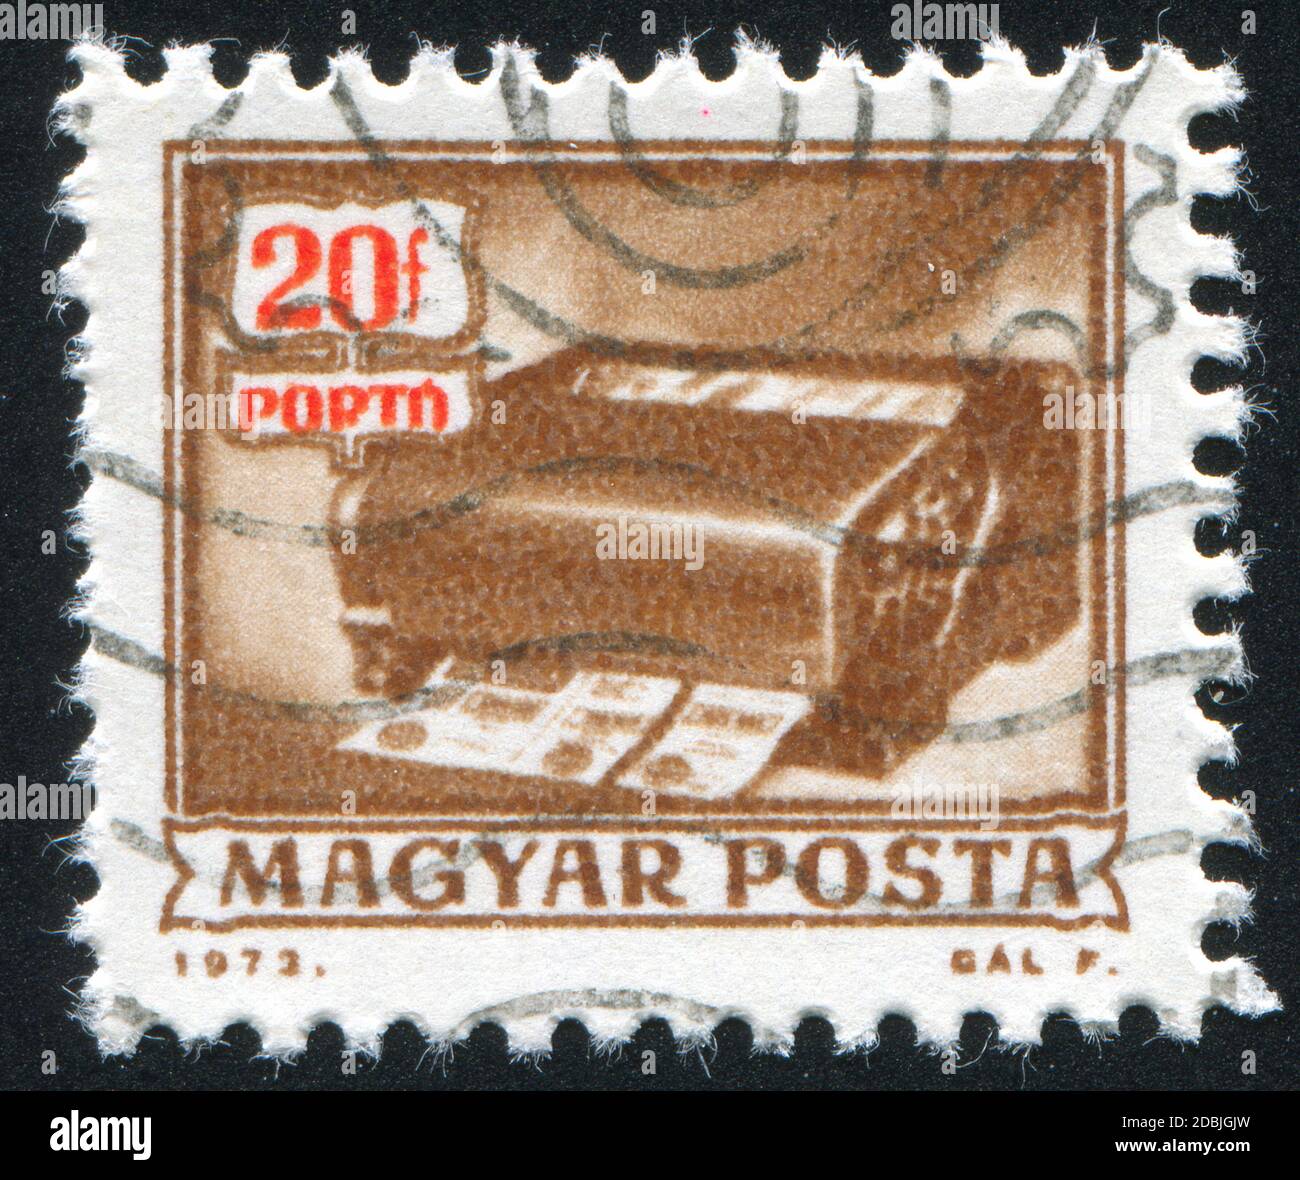 HUNGARY - CIRCA 1973: stamp printed by Hungary, shows money order canceling machine, circa 1973 Stock Photo